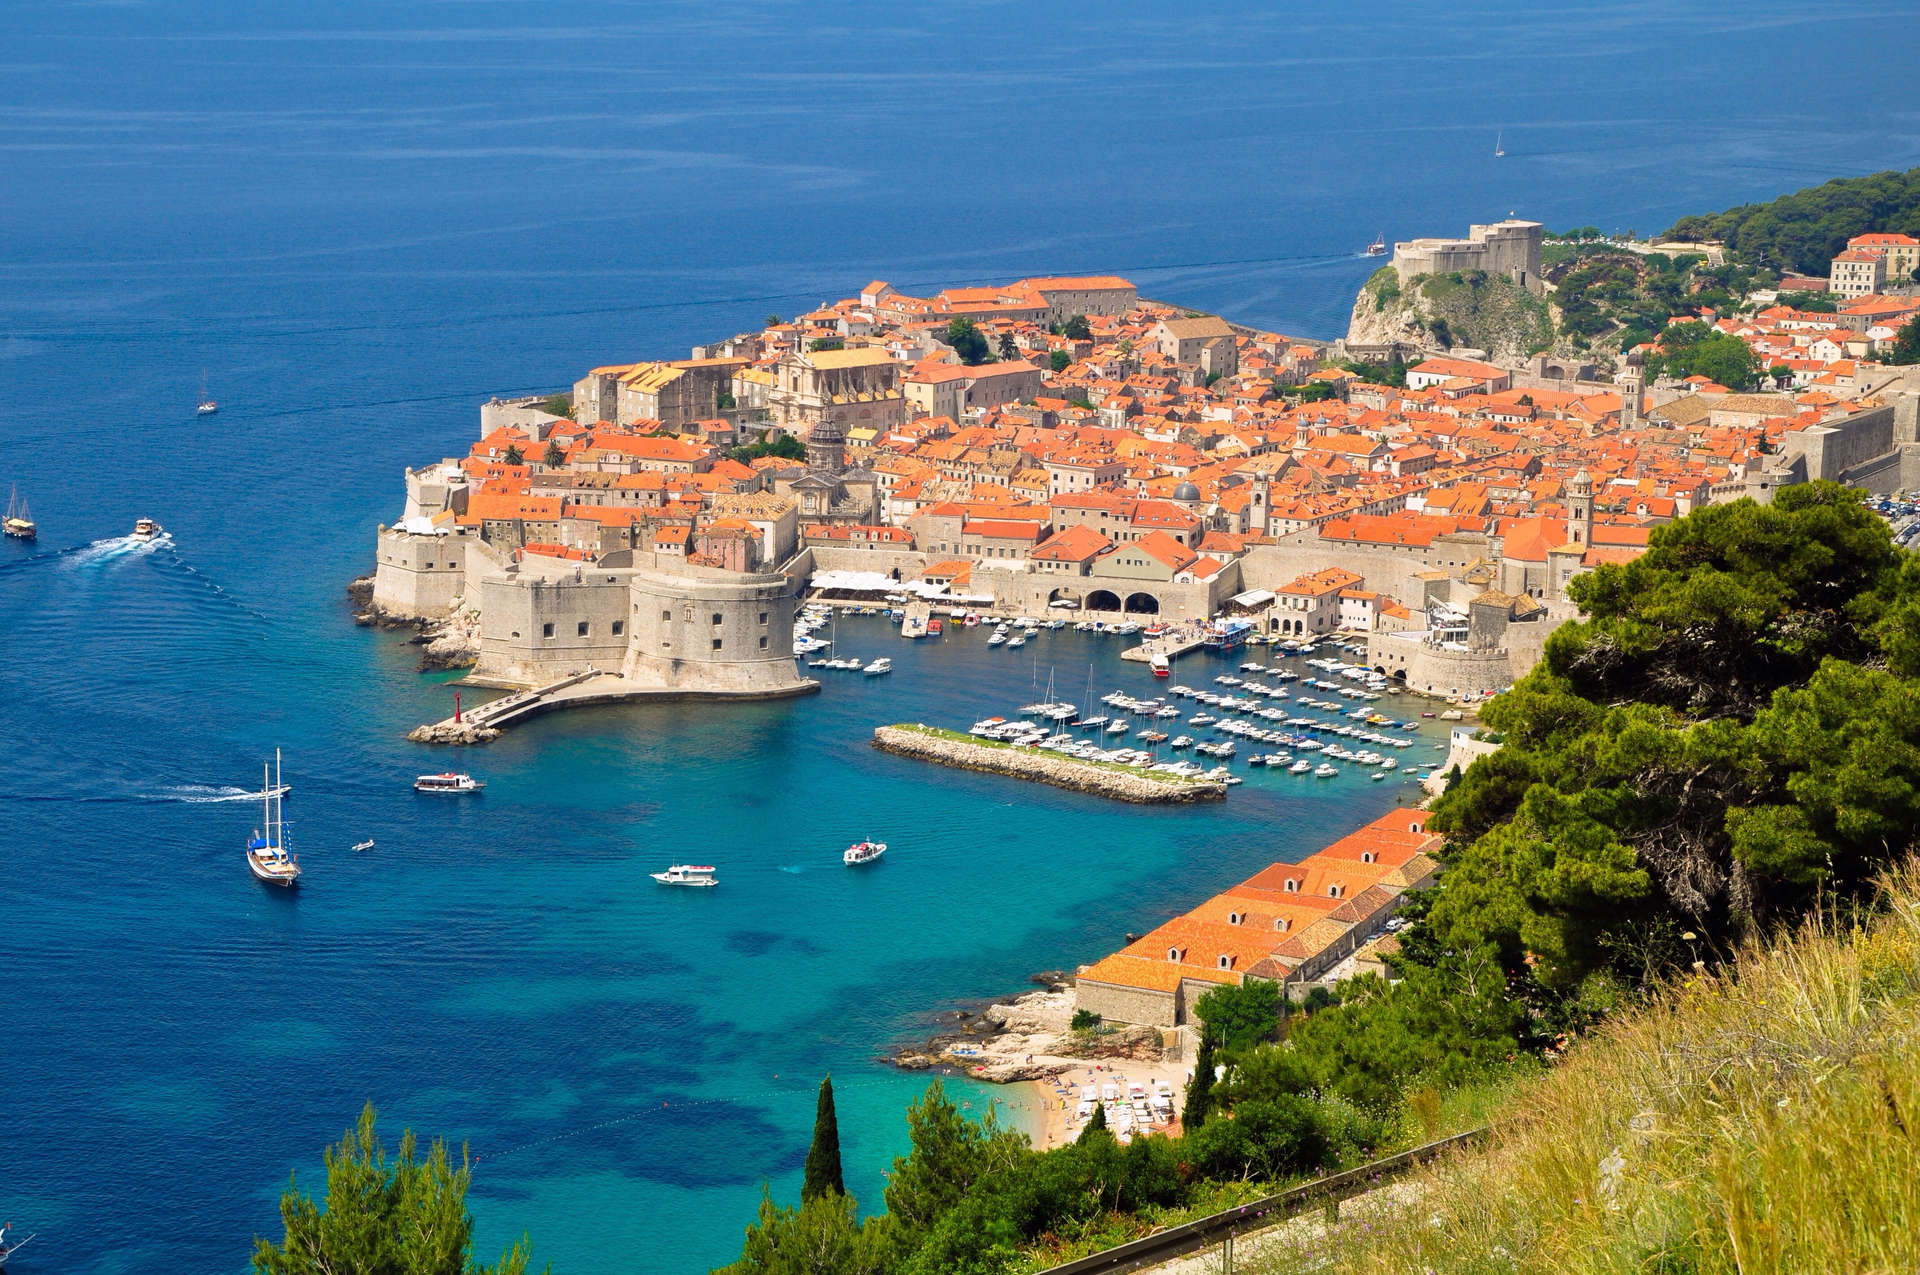 Summer weather hangs around for months in Dubrovnik